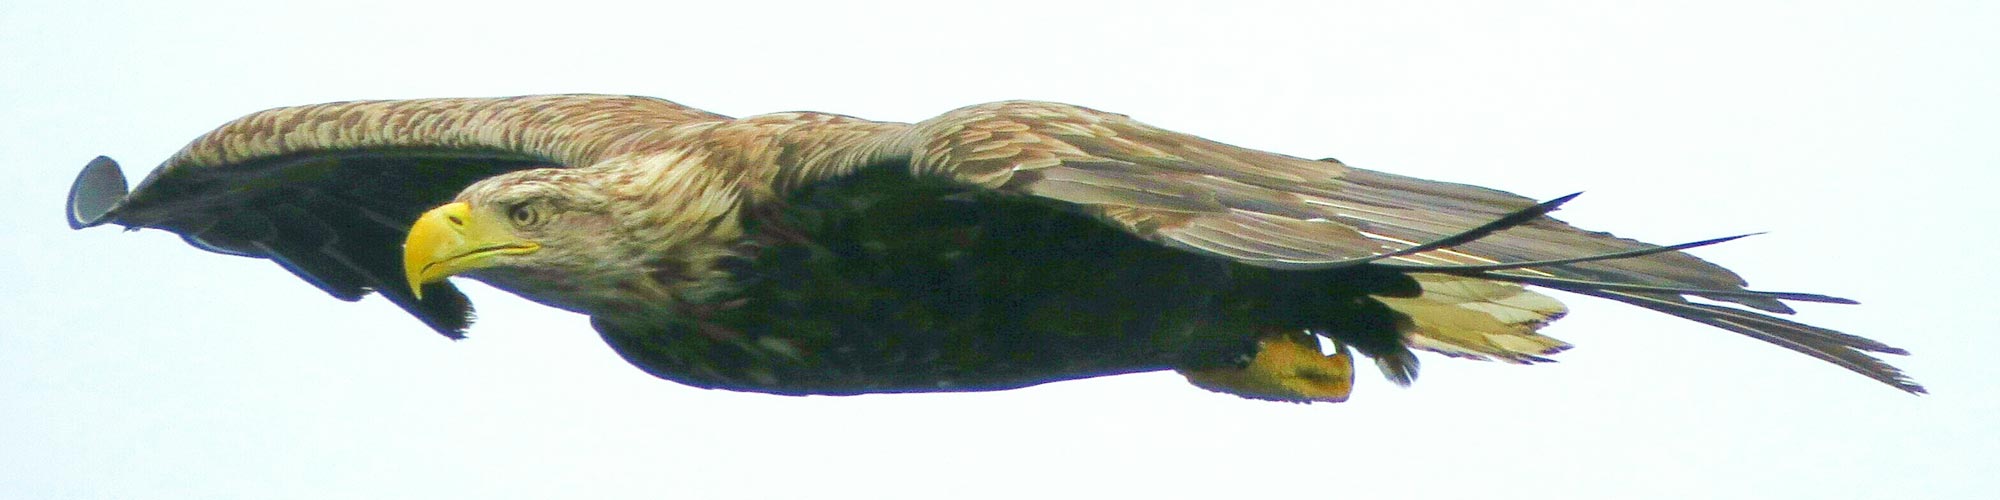 White-tailed Eagle in Scotland